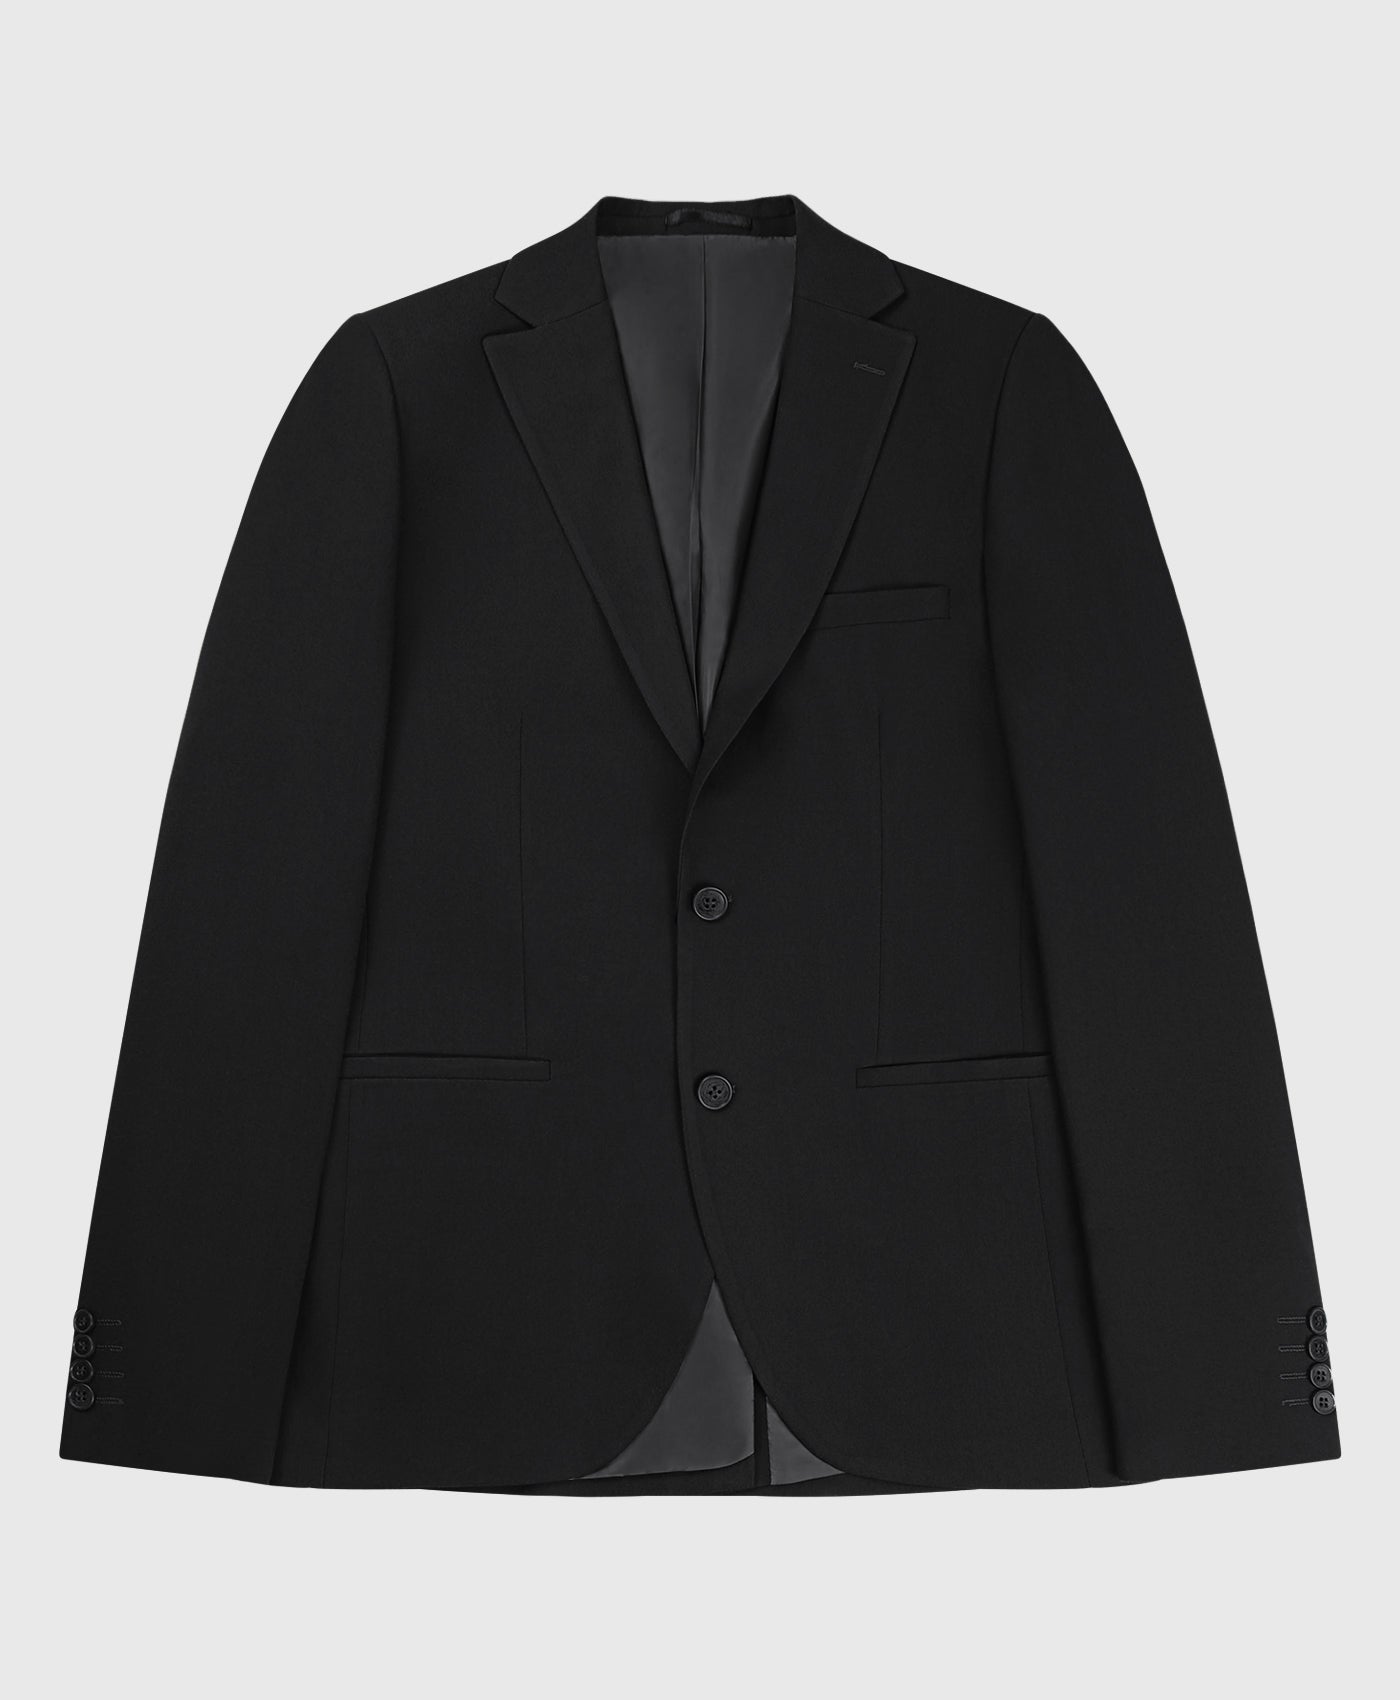 Wedding Plain Skinny Suit Jacket Black